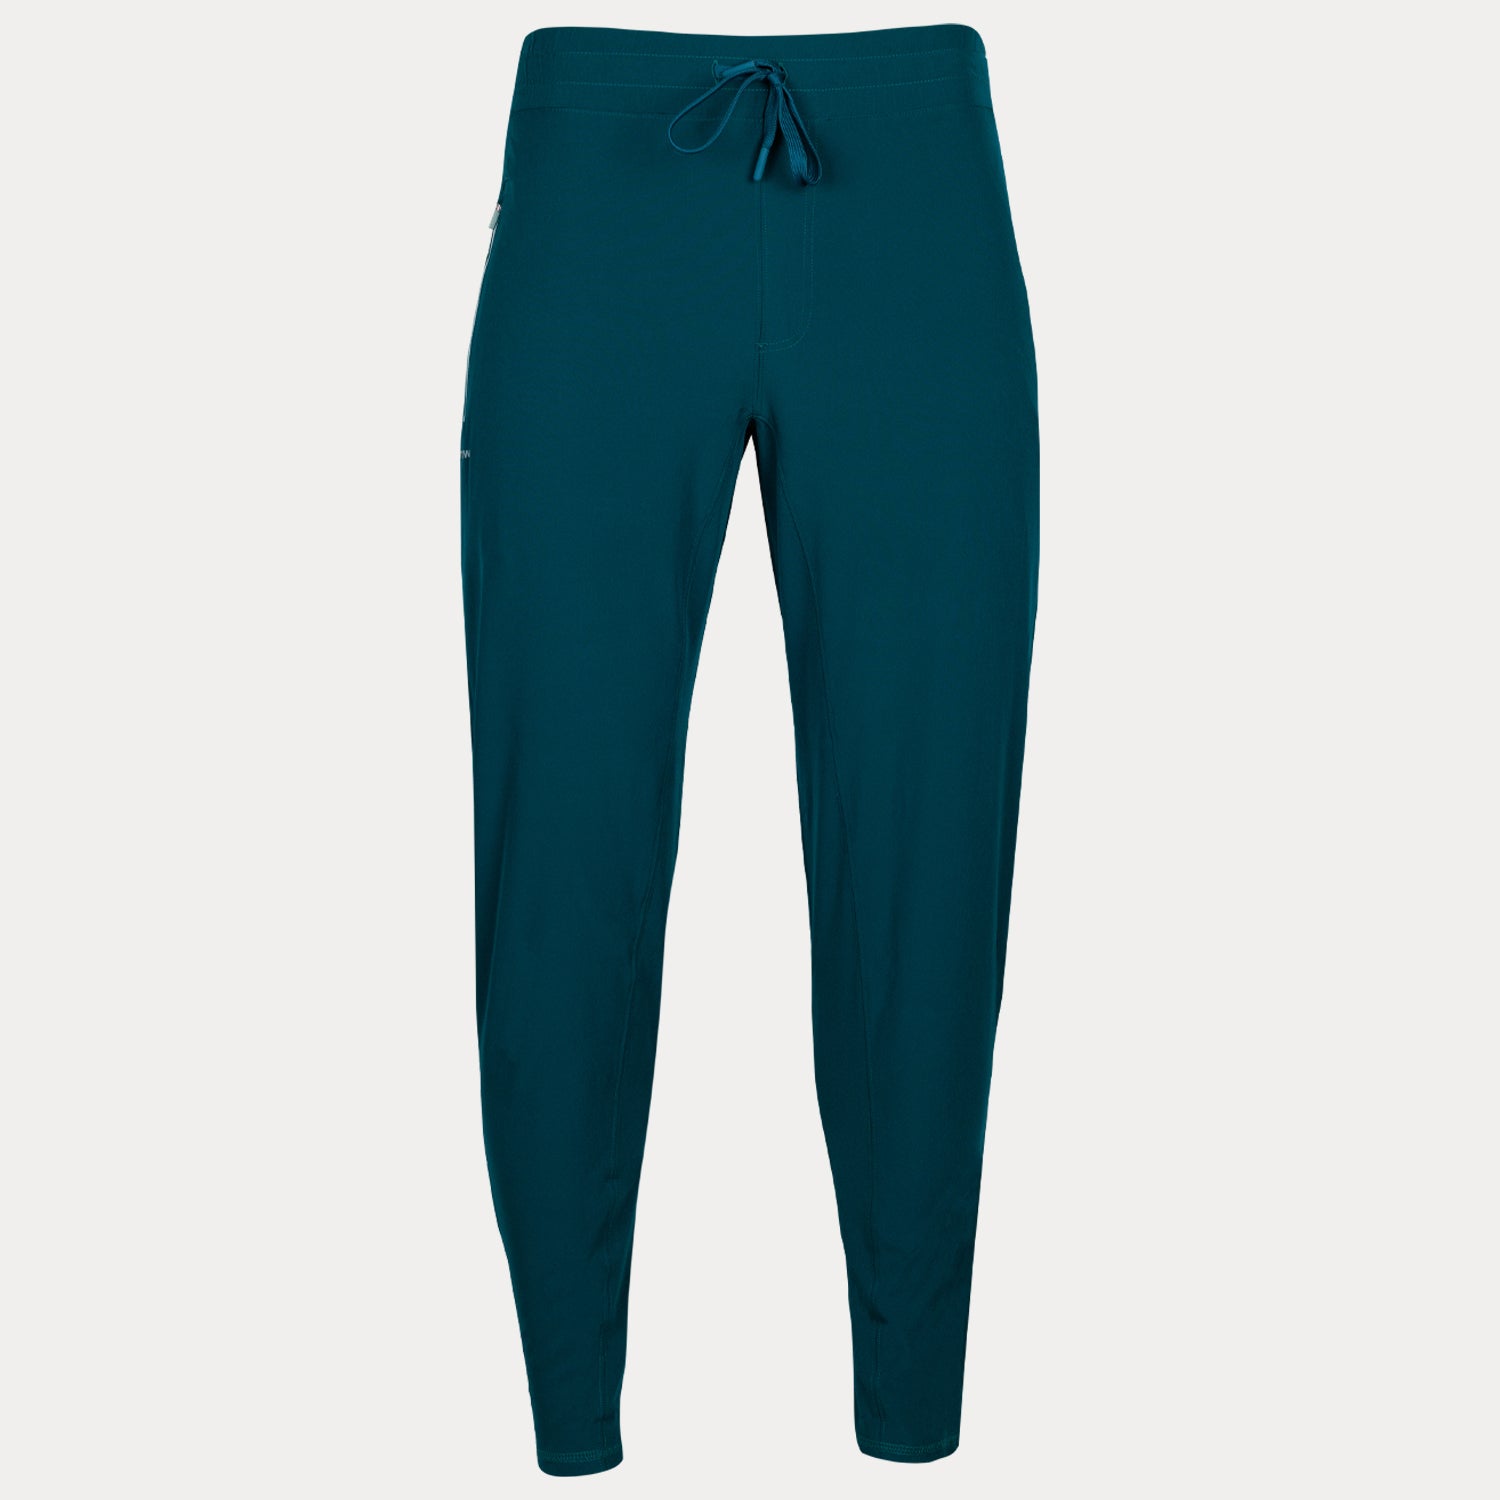 dark blue unisex rowing pant with drawstring waist